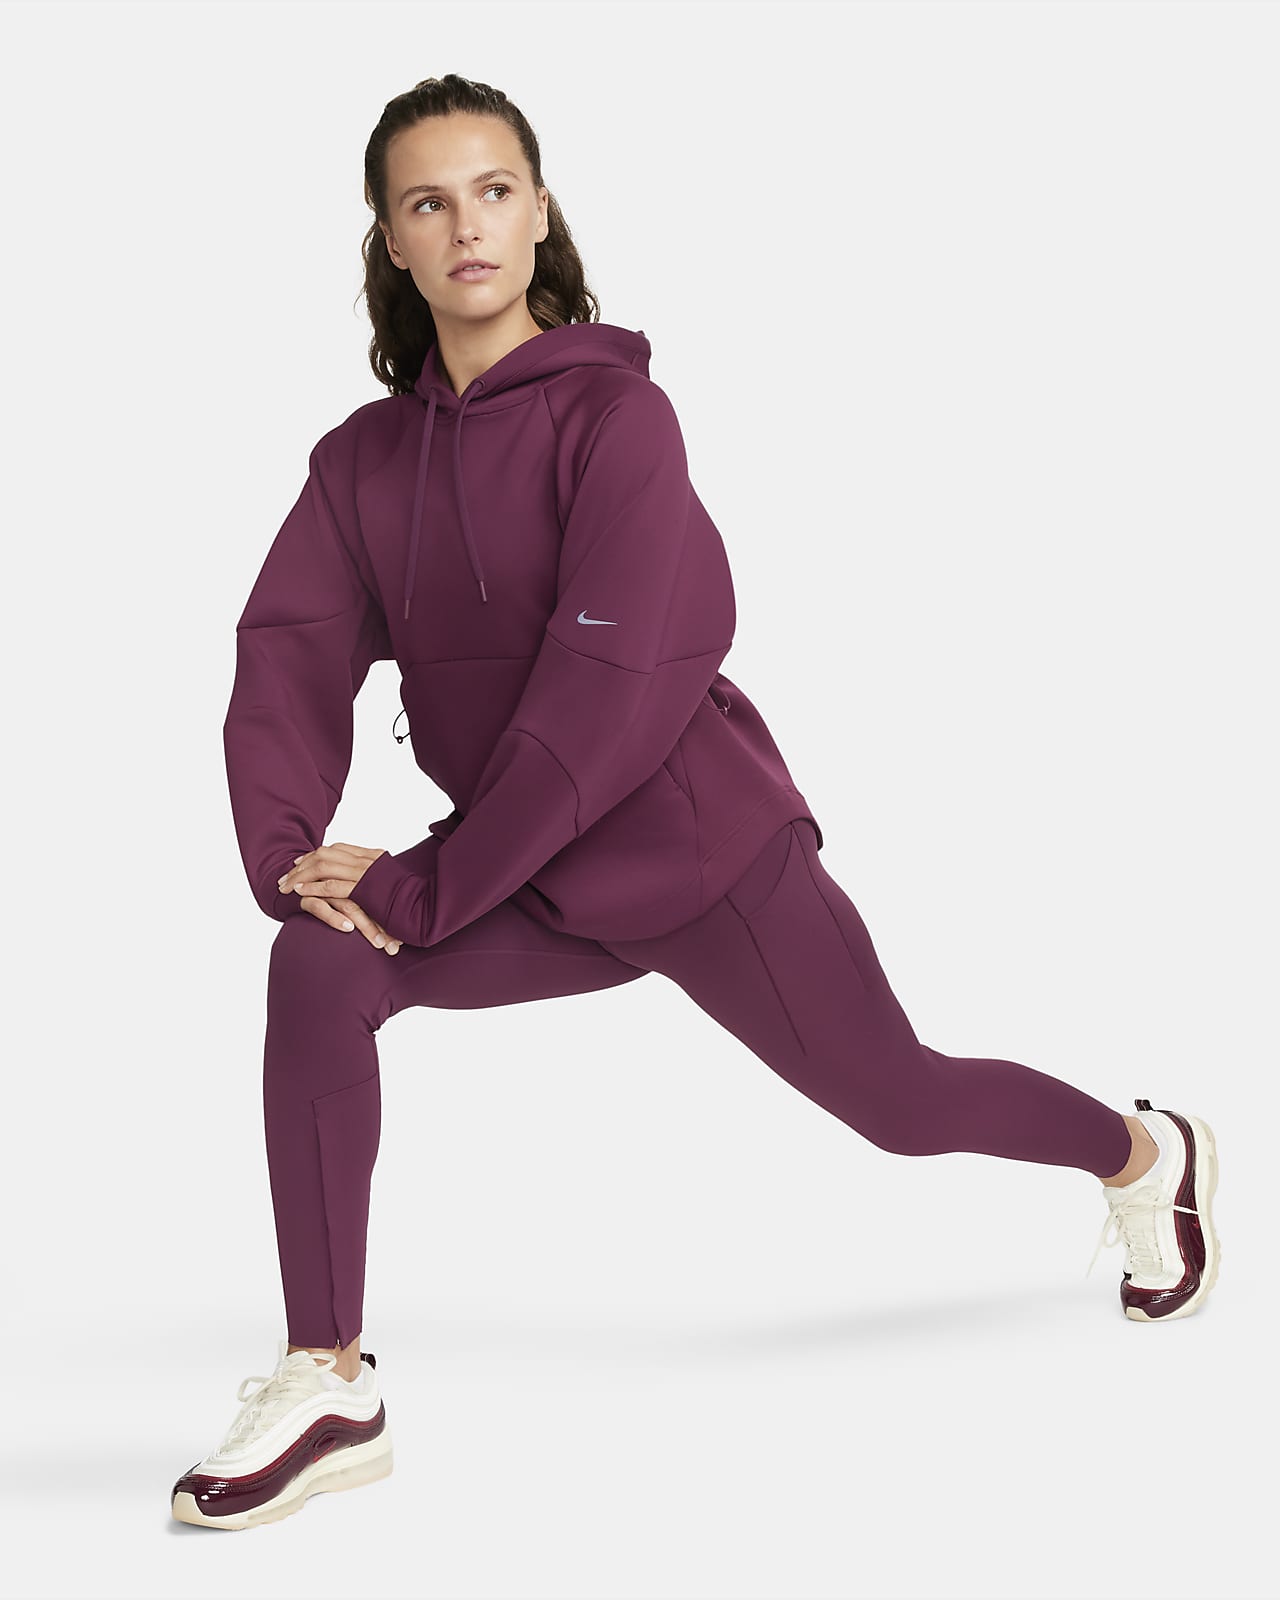 Women's Training & Gym Clothing. Nike IN